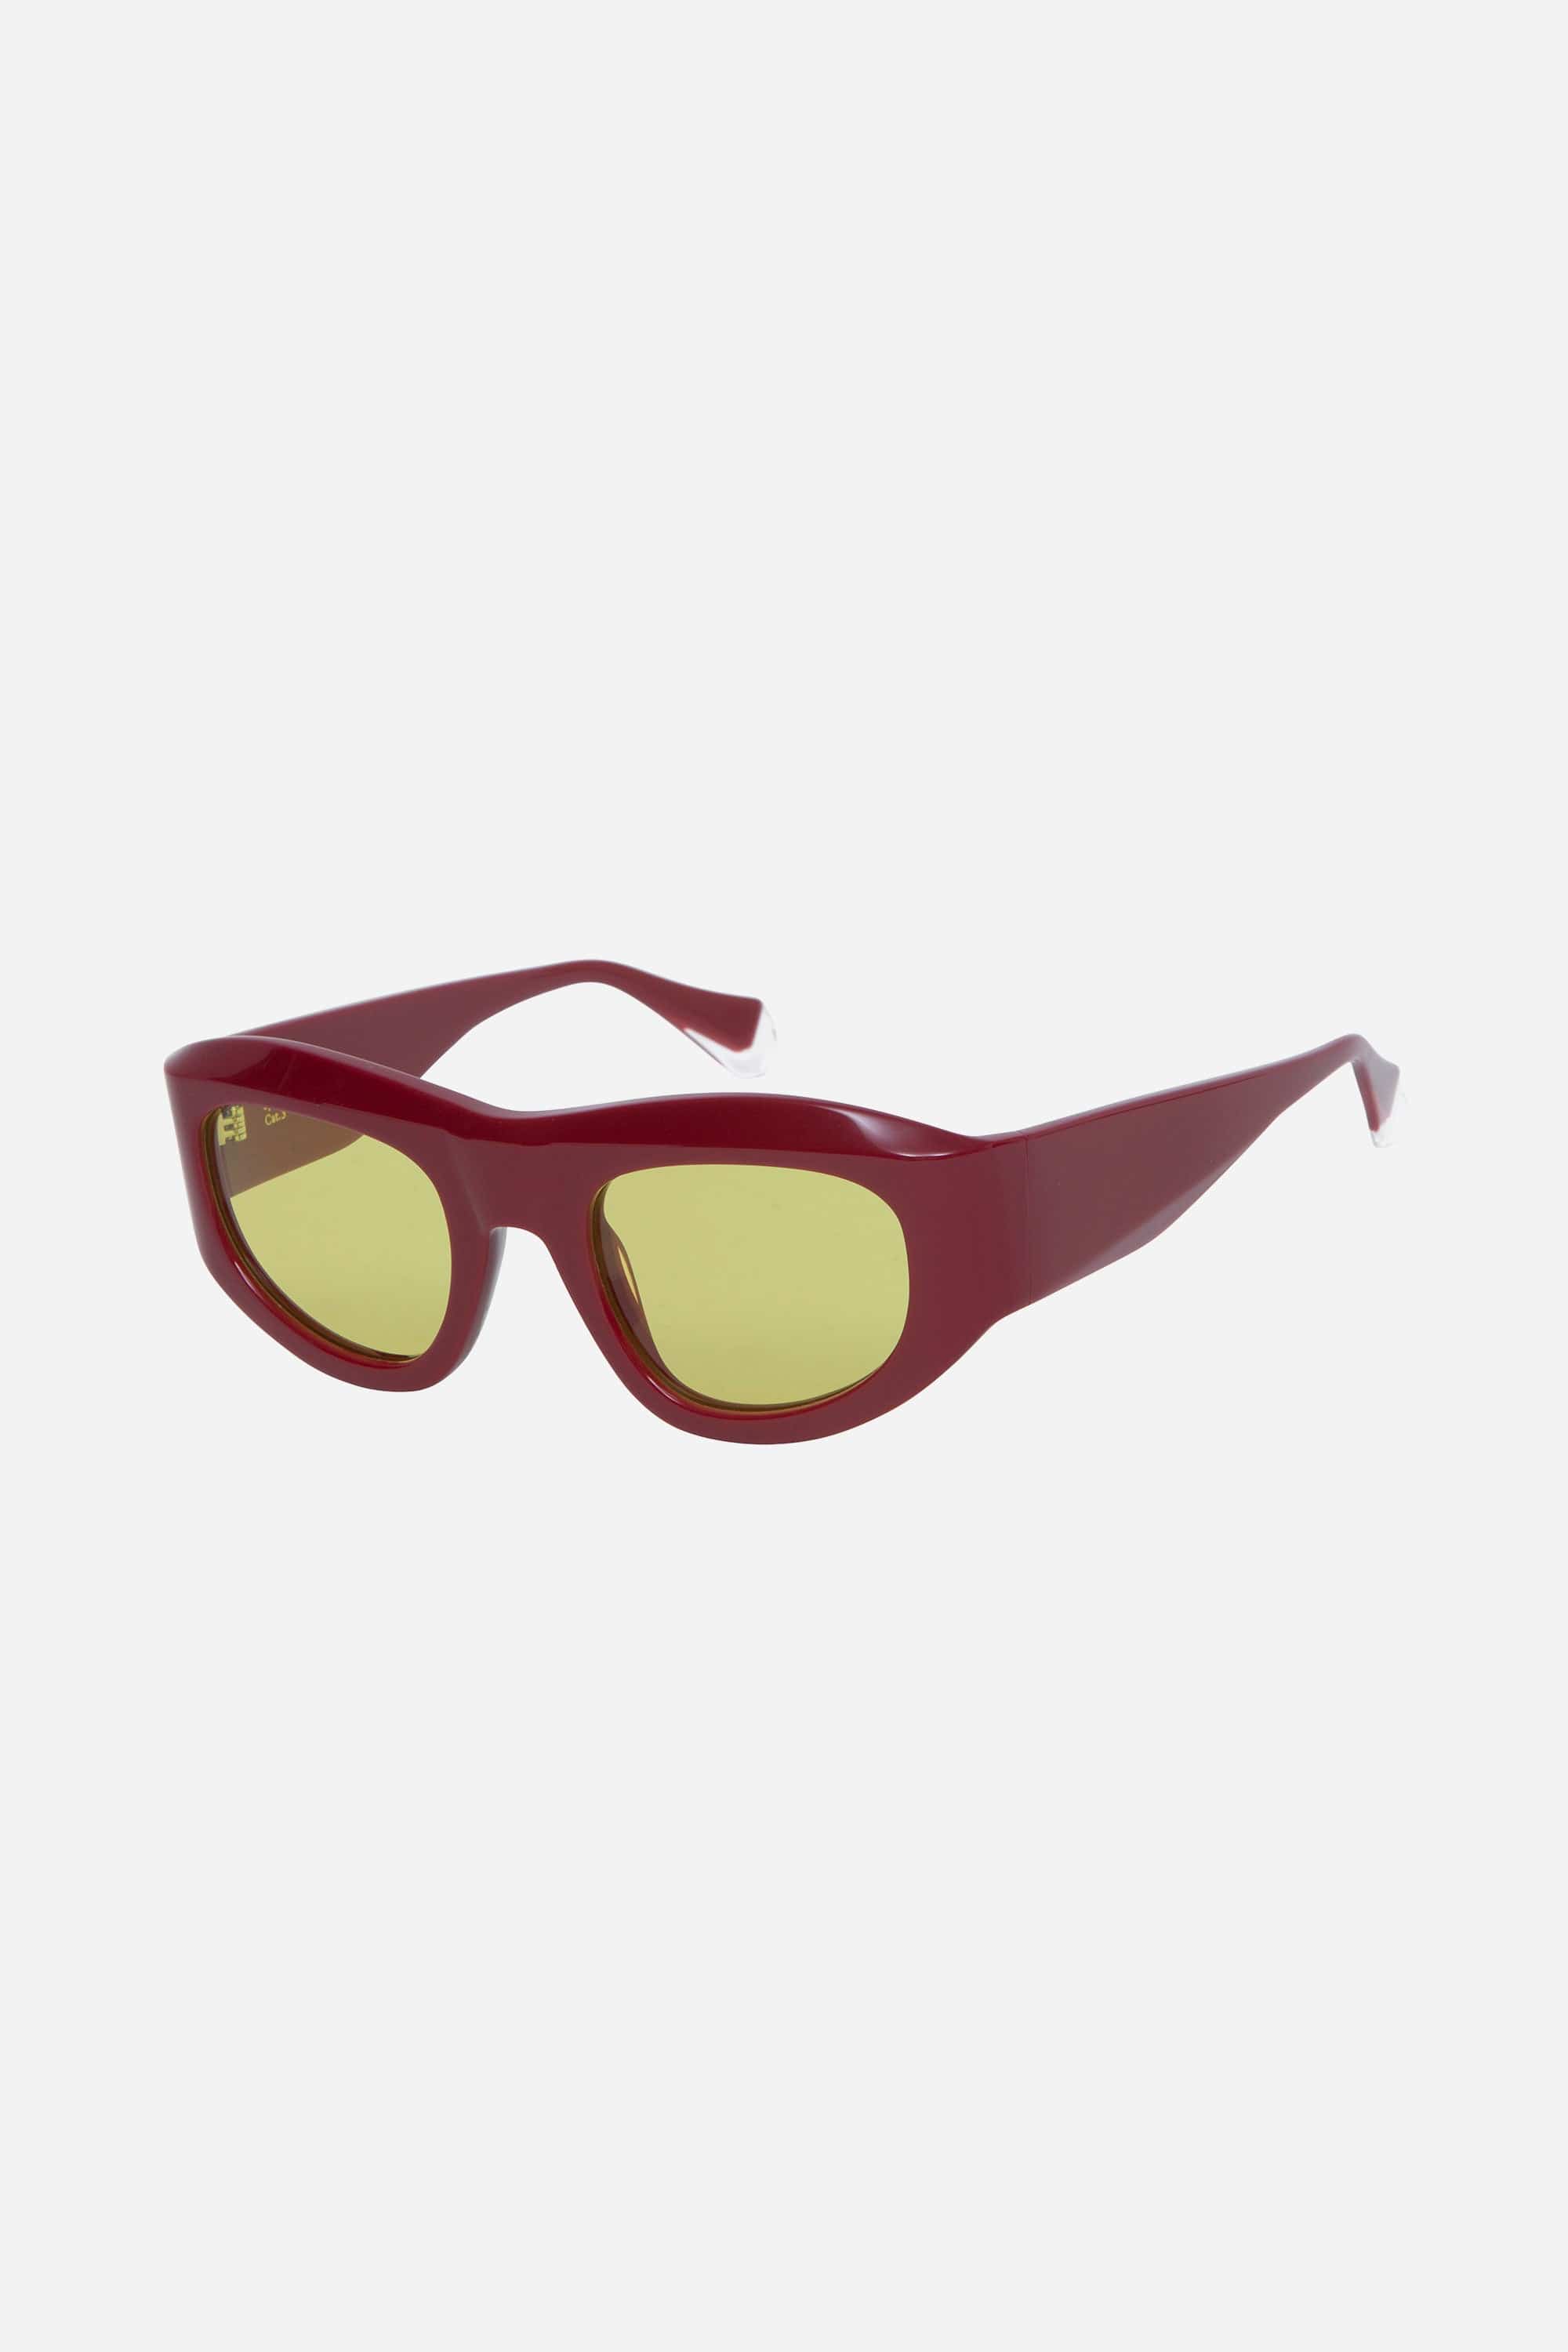 EXCLUSIVE Gigi Studios wrap around red sunglasses - Eyewear Club